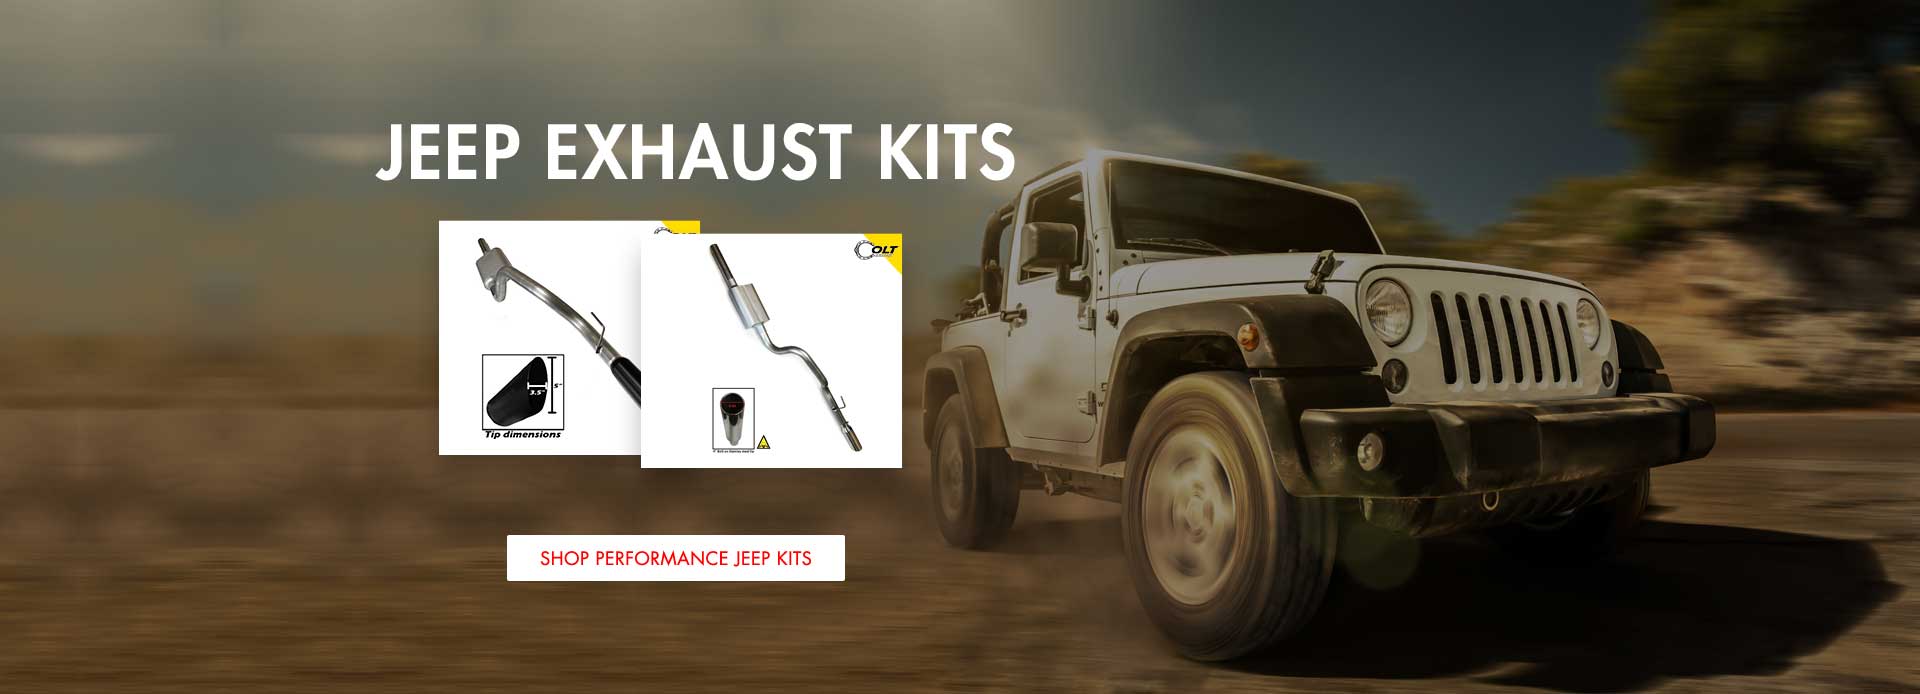 Jeep Exhaust Kits